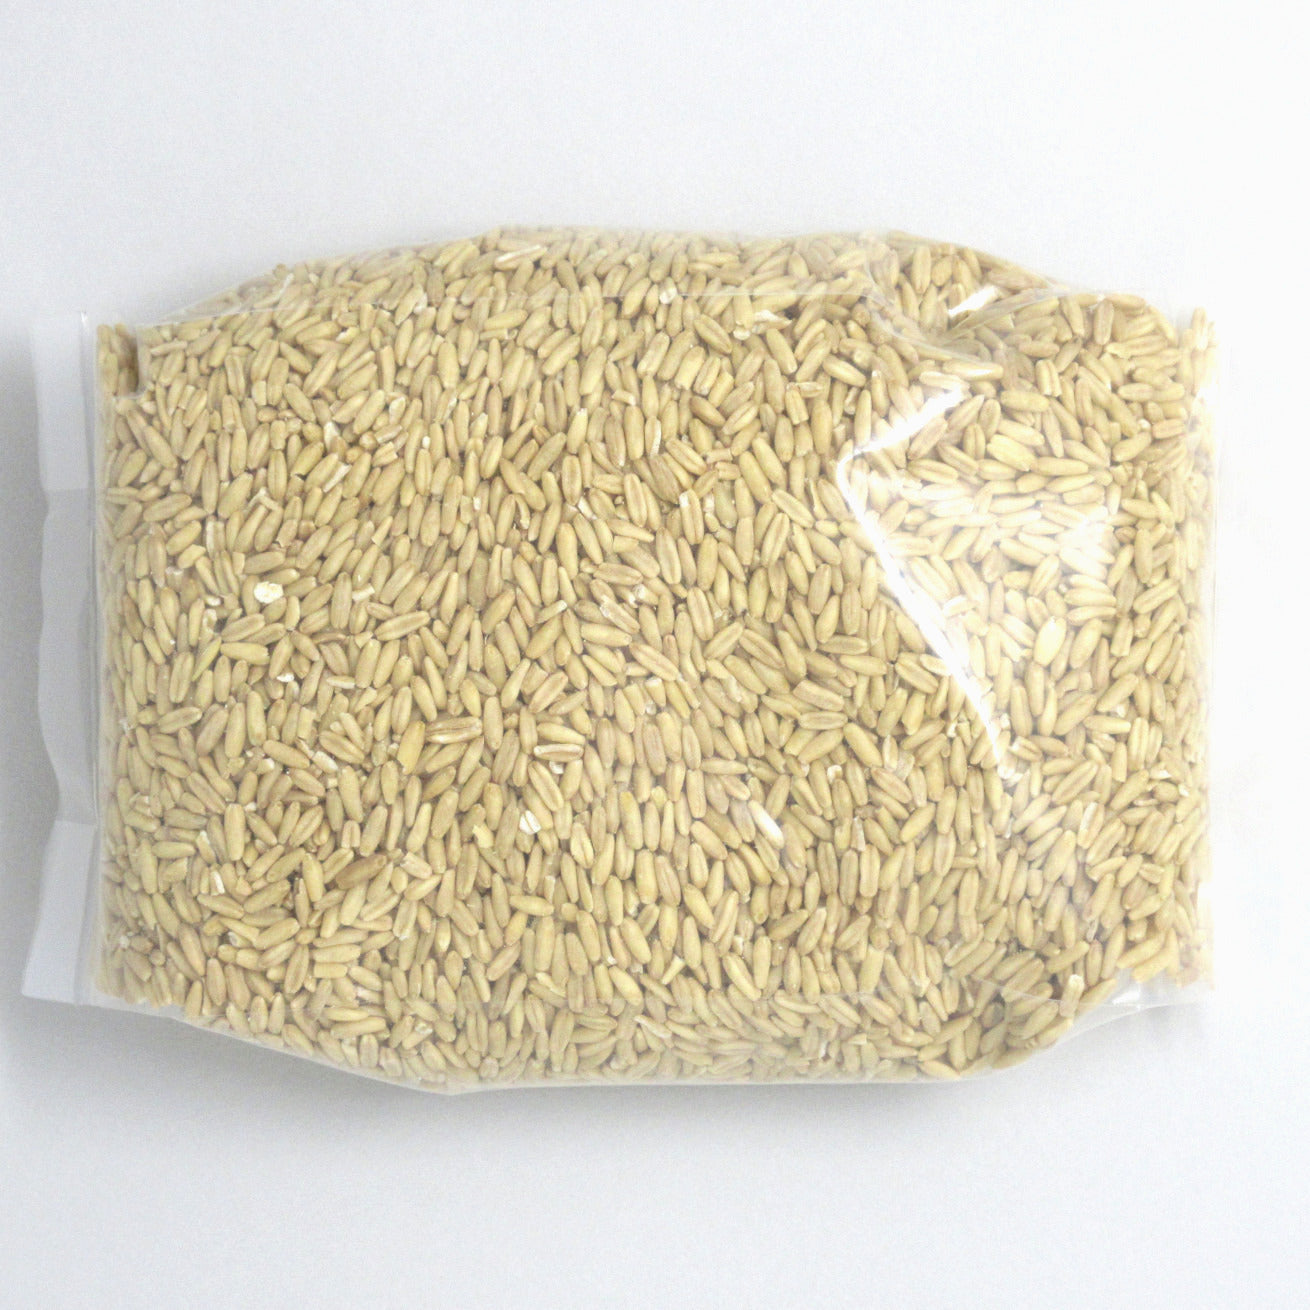 Flour Barrel product image - Oat Groats